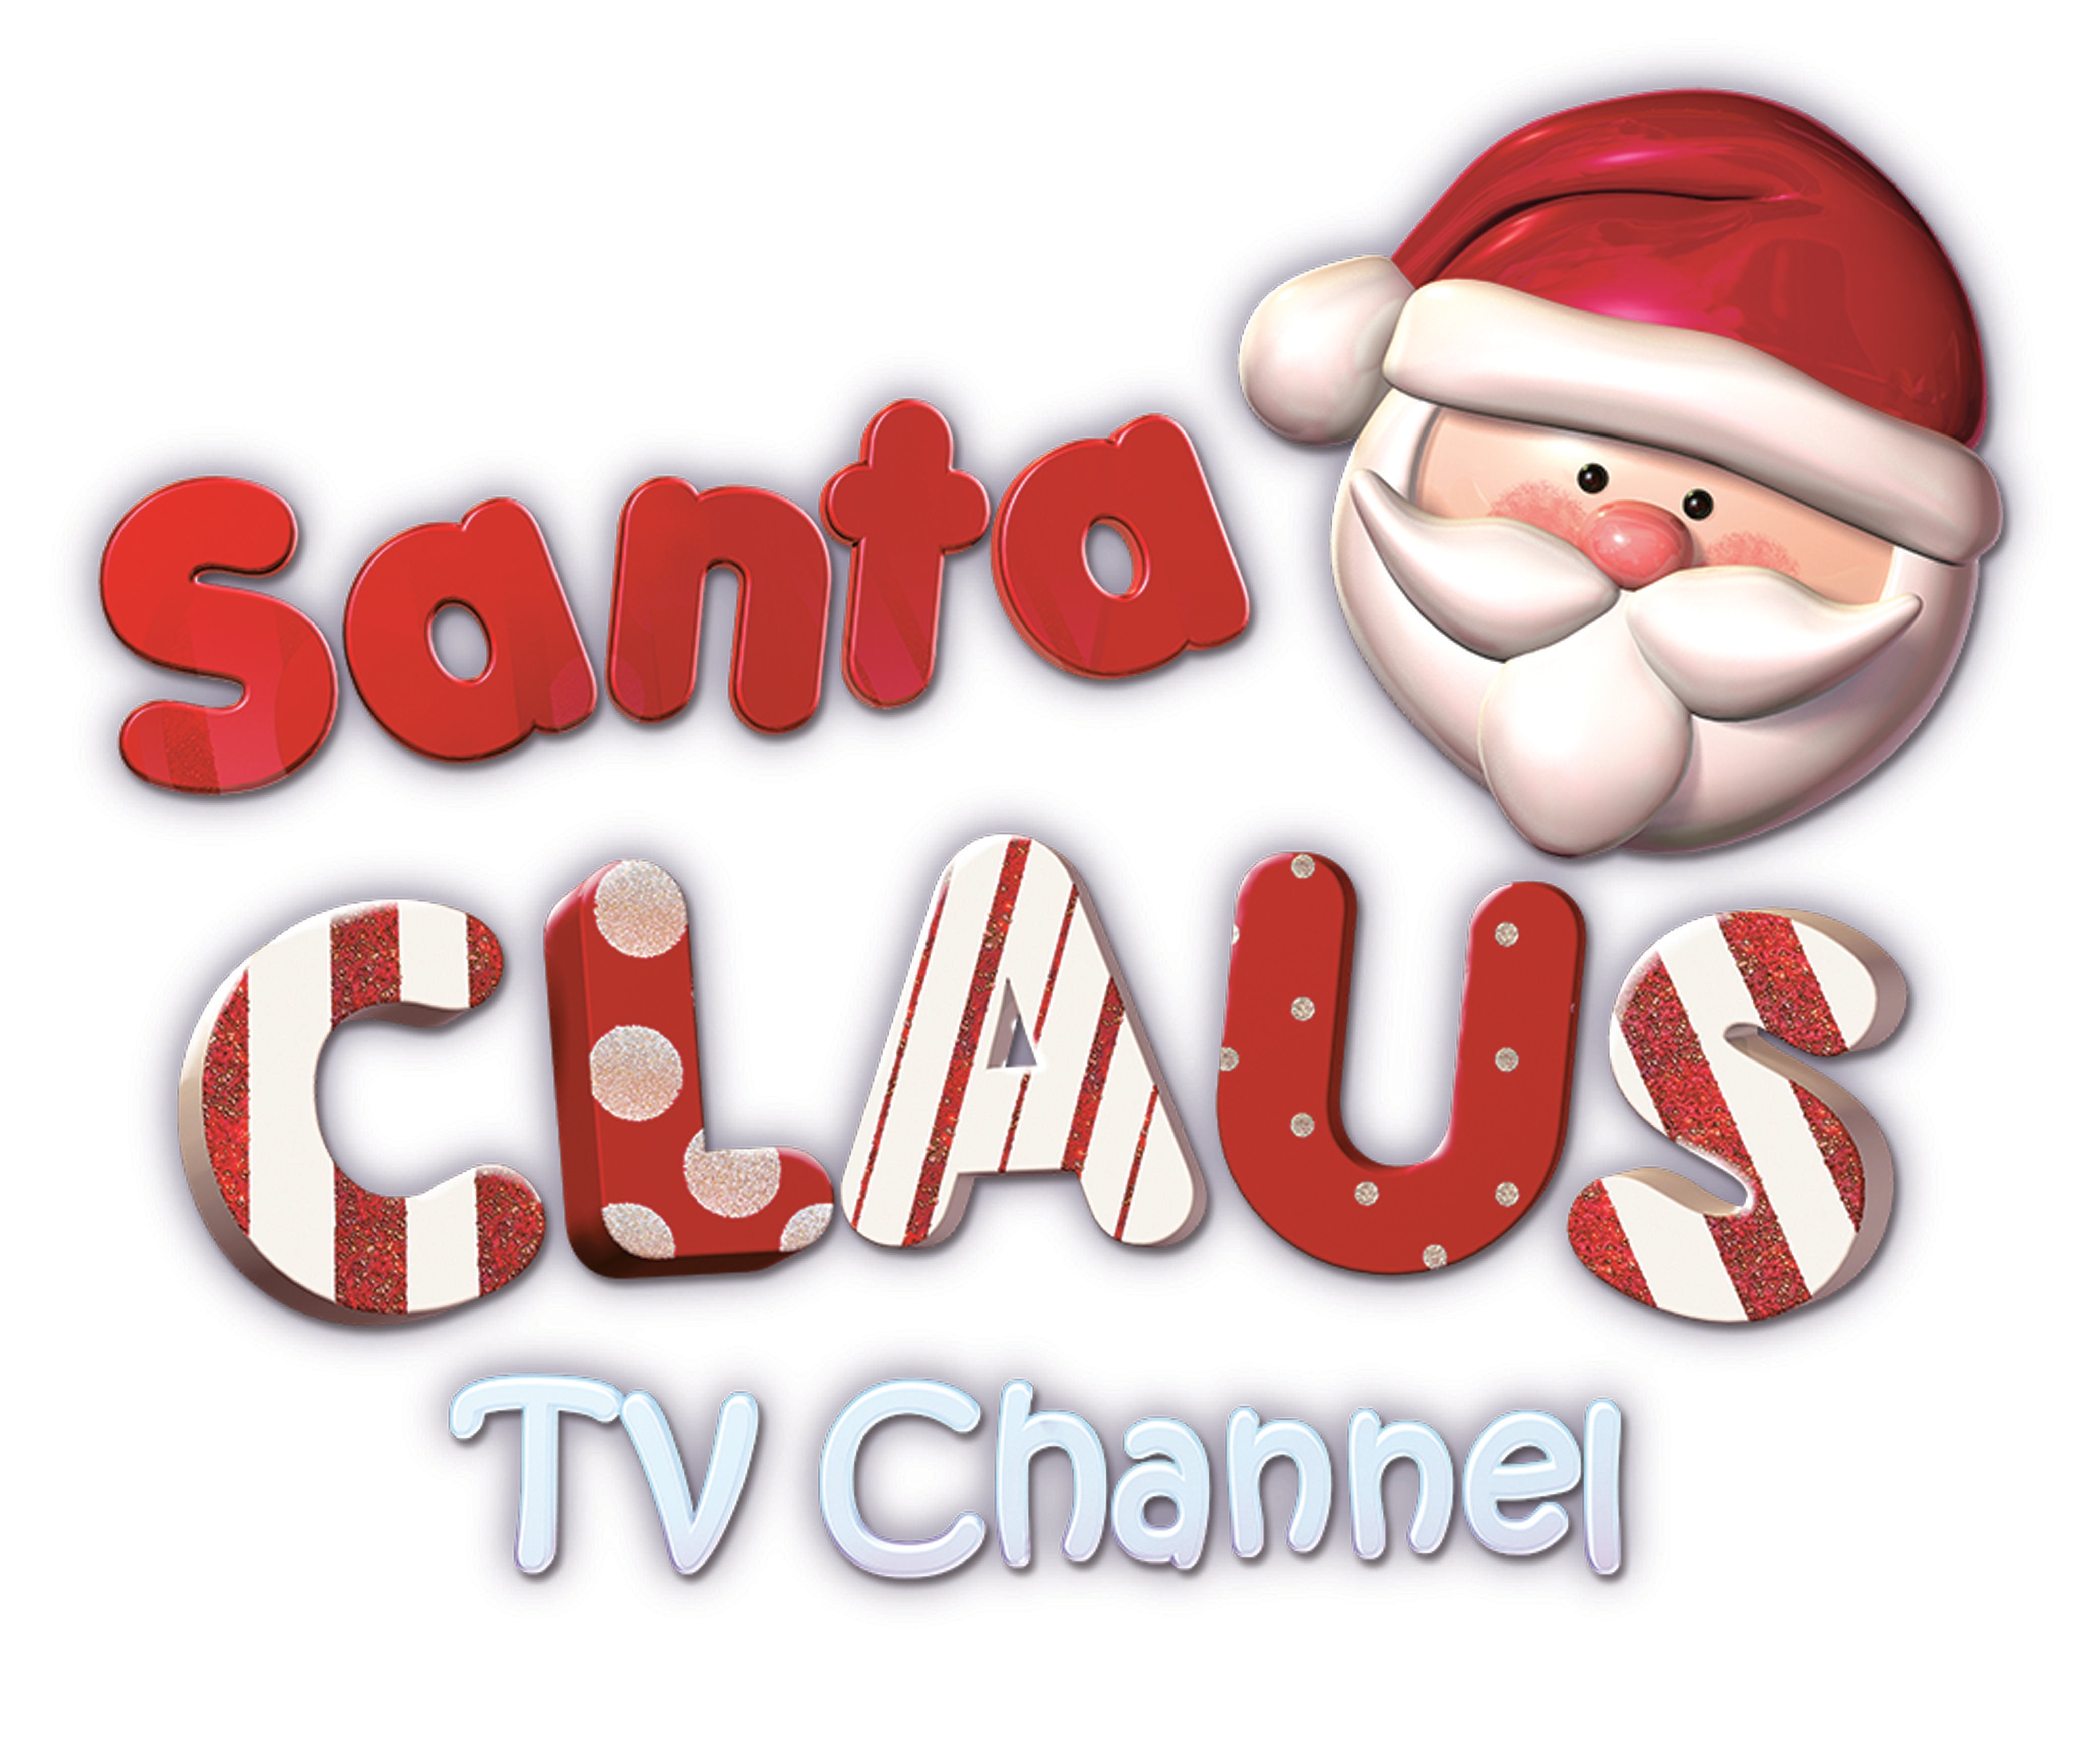 Claus Logo - Lagardere TV Distribution / all channels / channels / Santa Claus TV